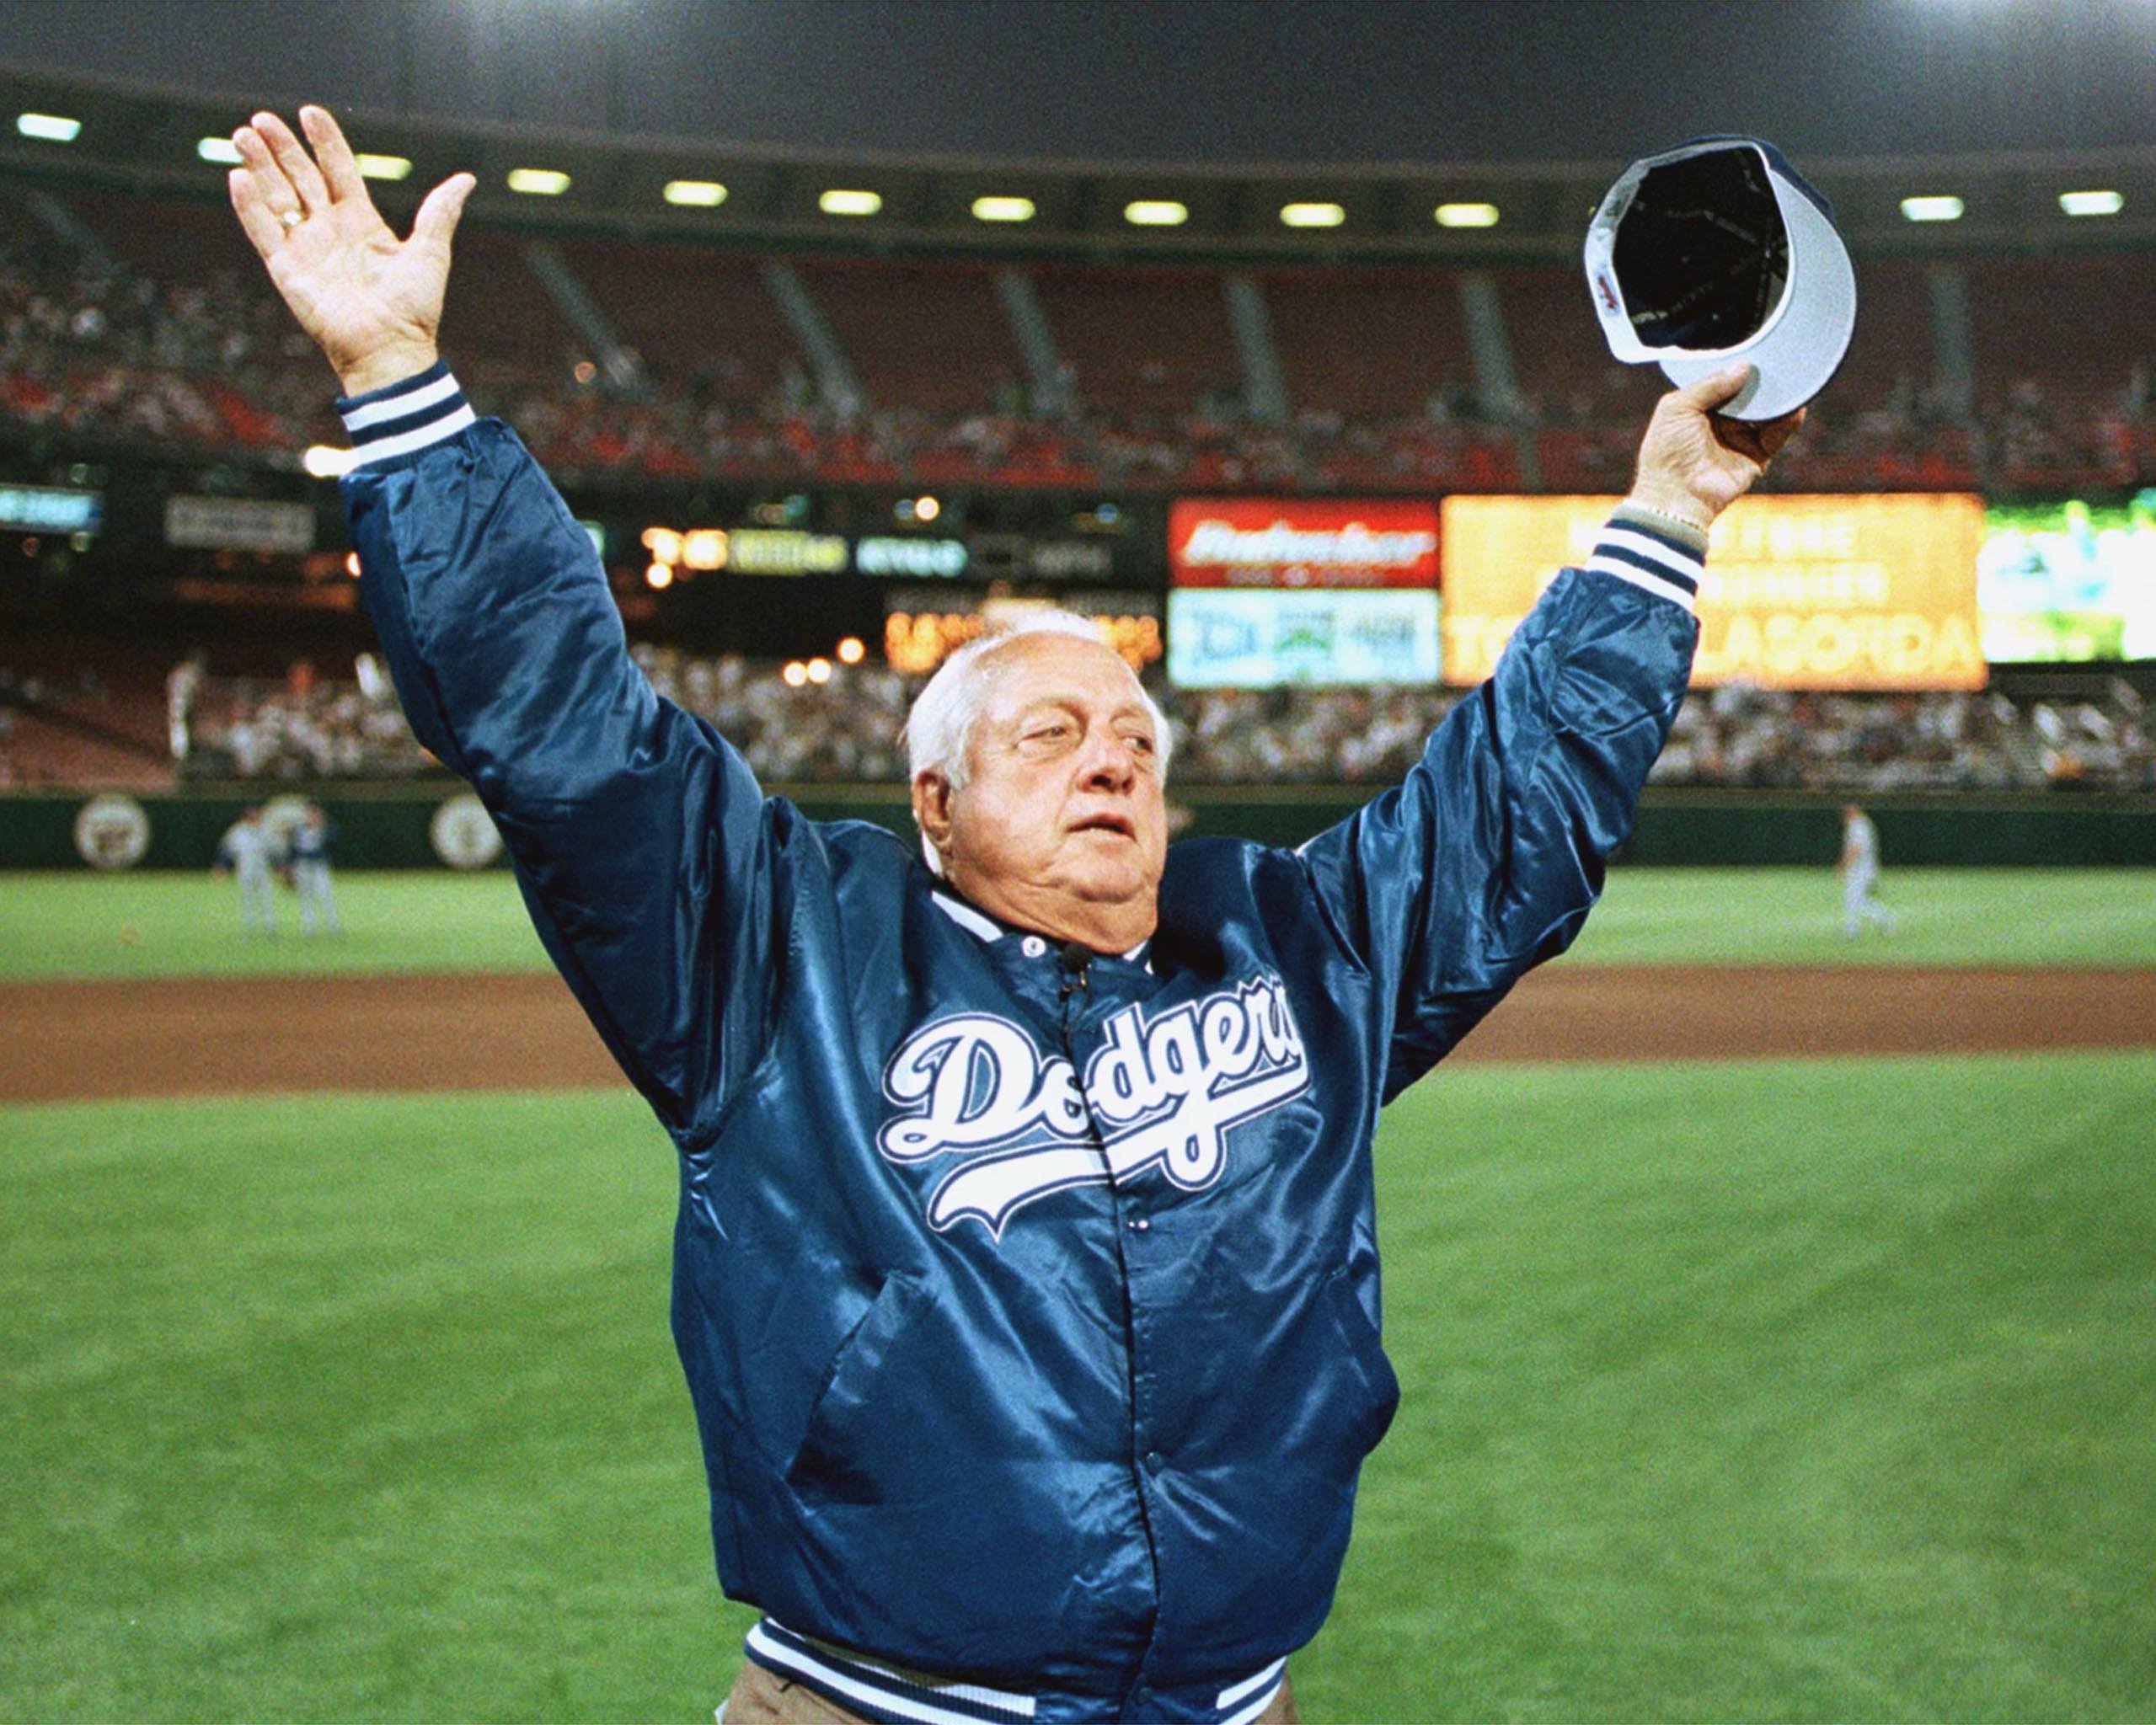 Dodgers legend Tommy Lasorda dies at 93